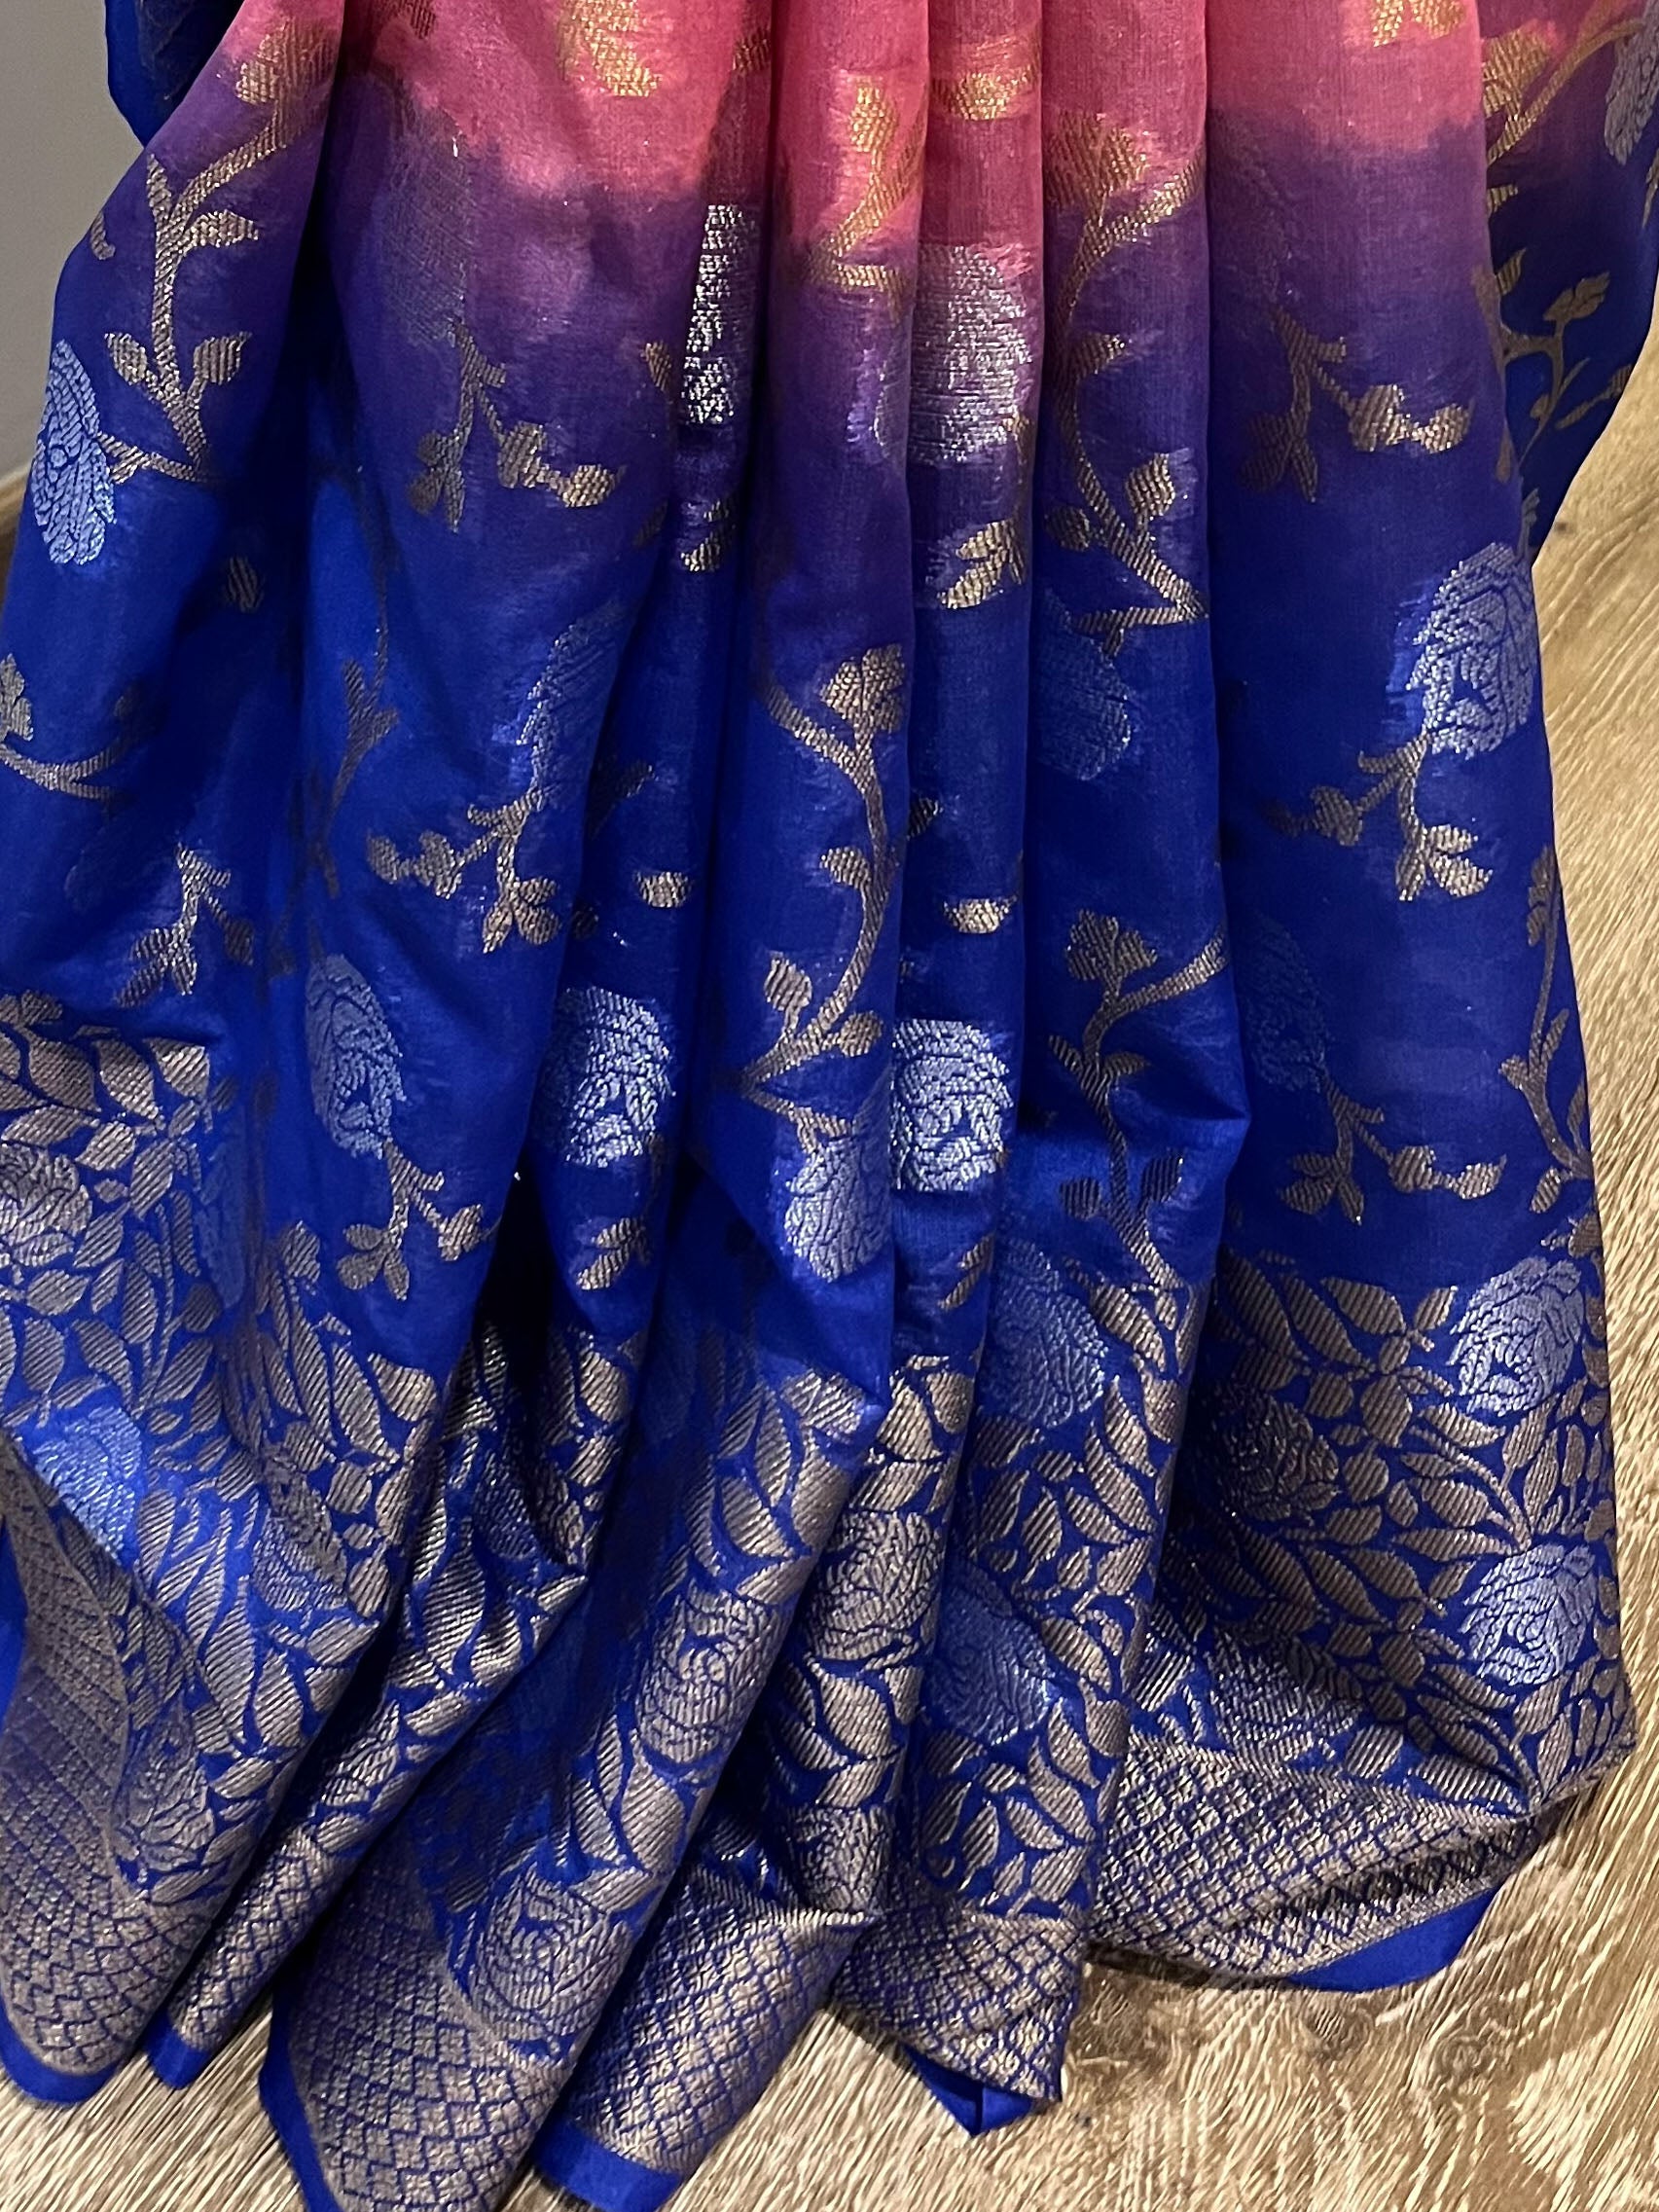 Banarasee Handwoven Semi-Chiffon Saree With Silver Zari Design & Dual Color-Blue & Pink